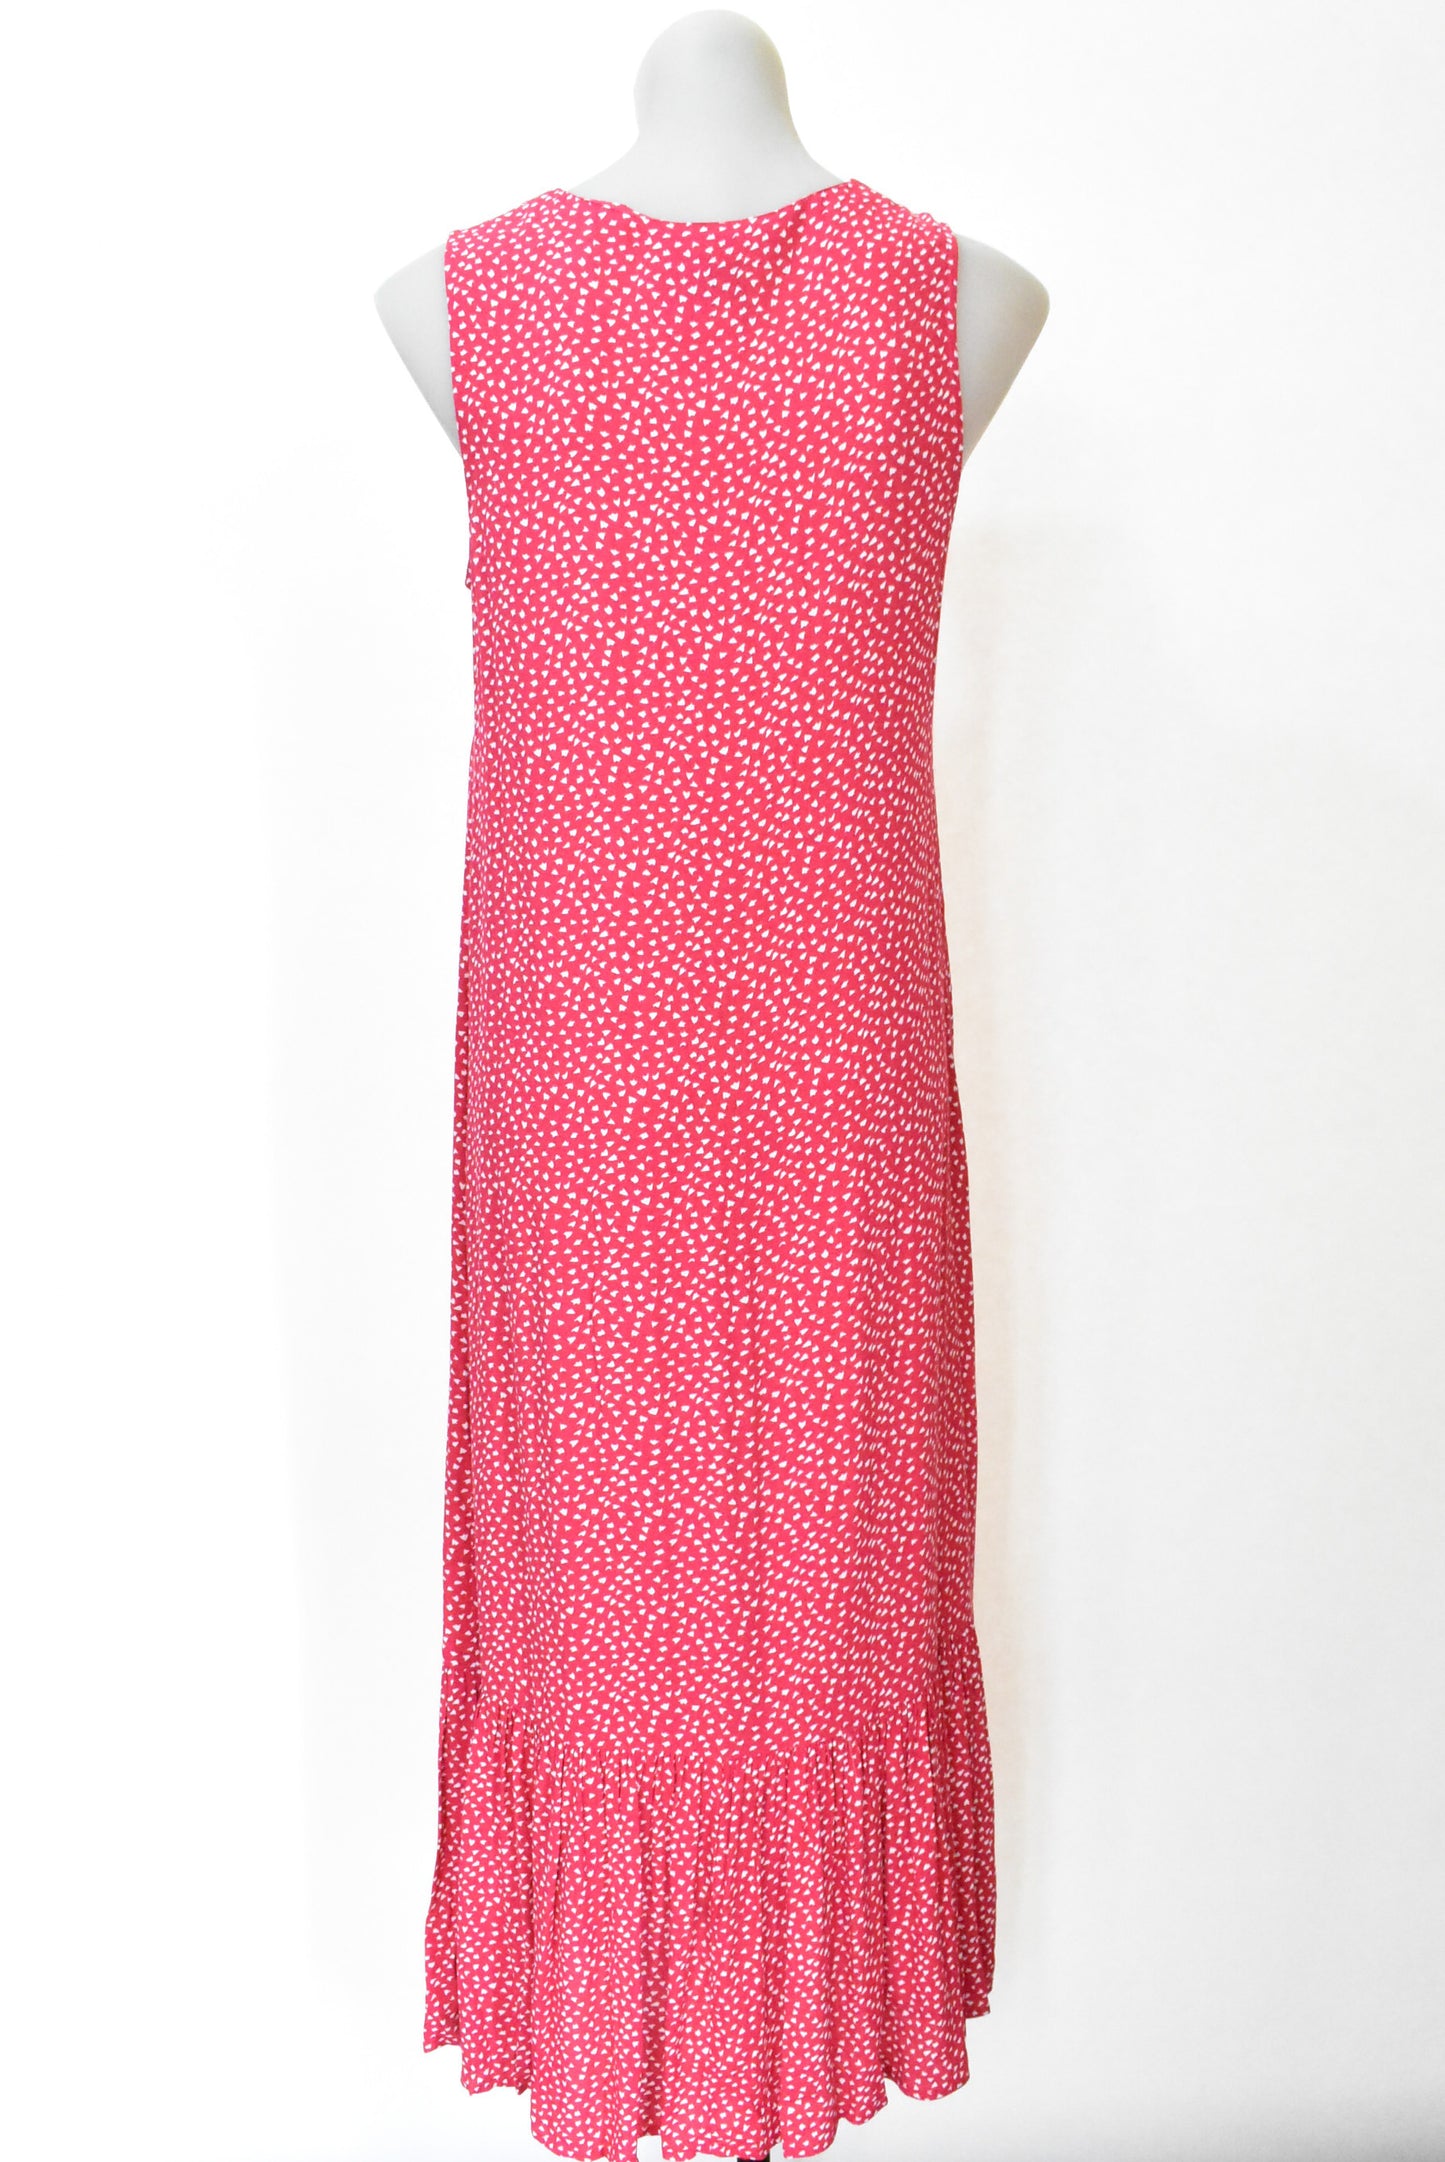 Emerge pink maxi dress, 8